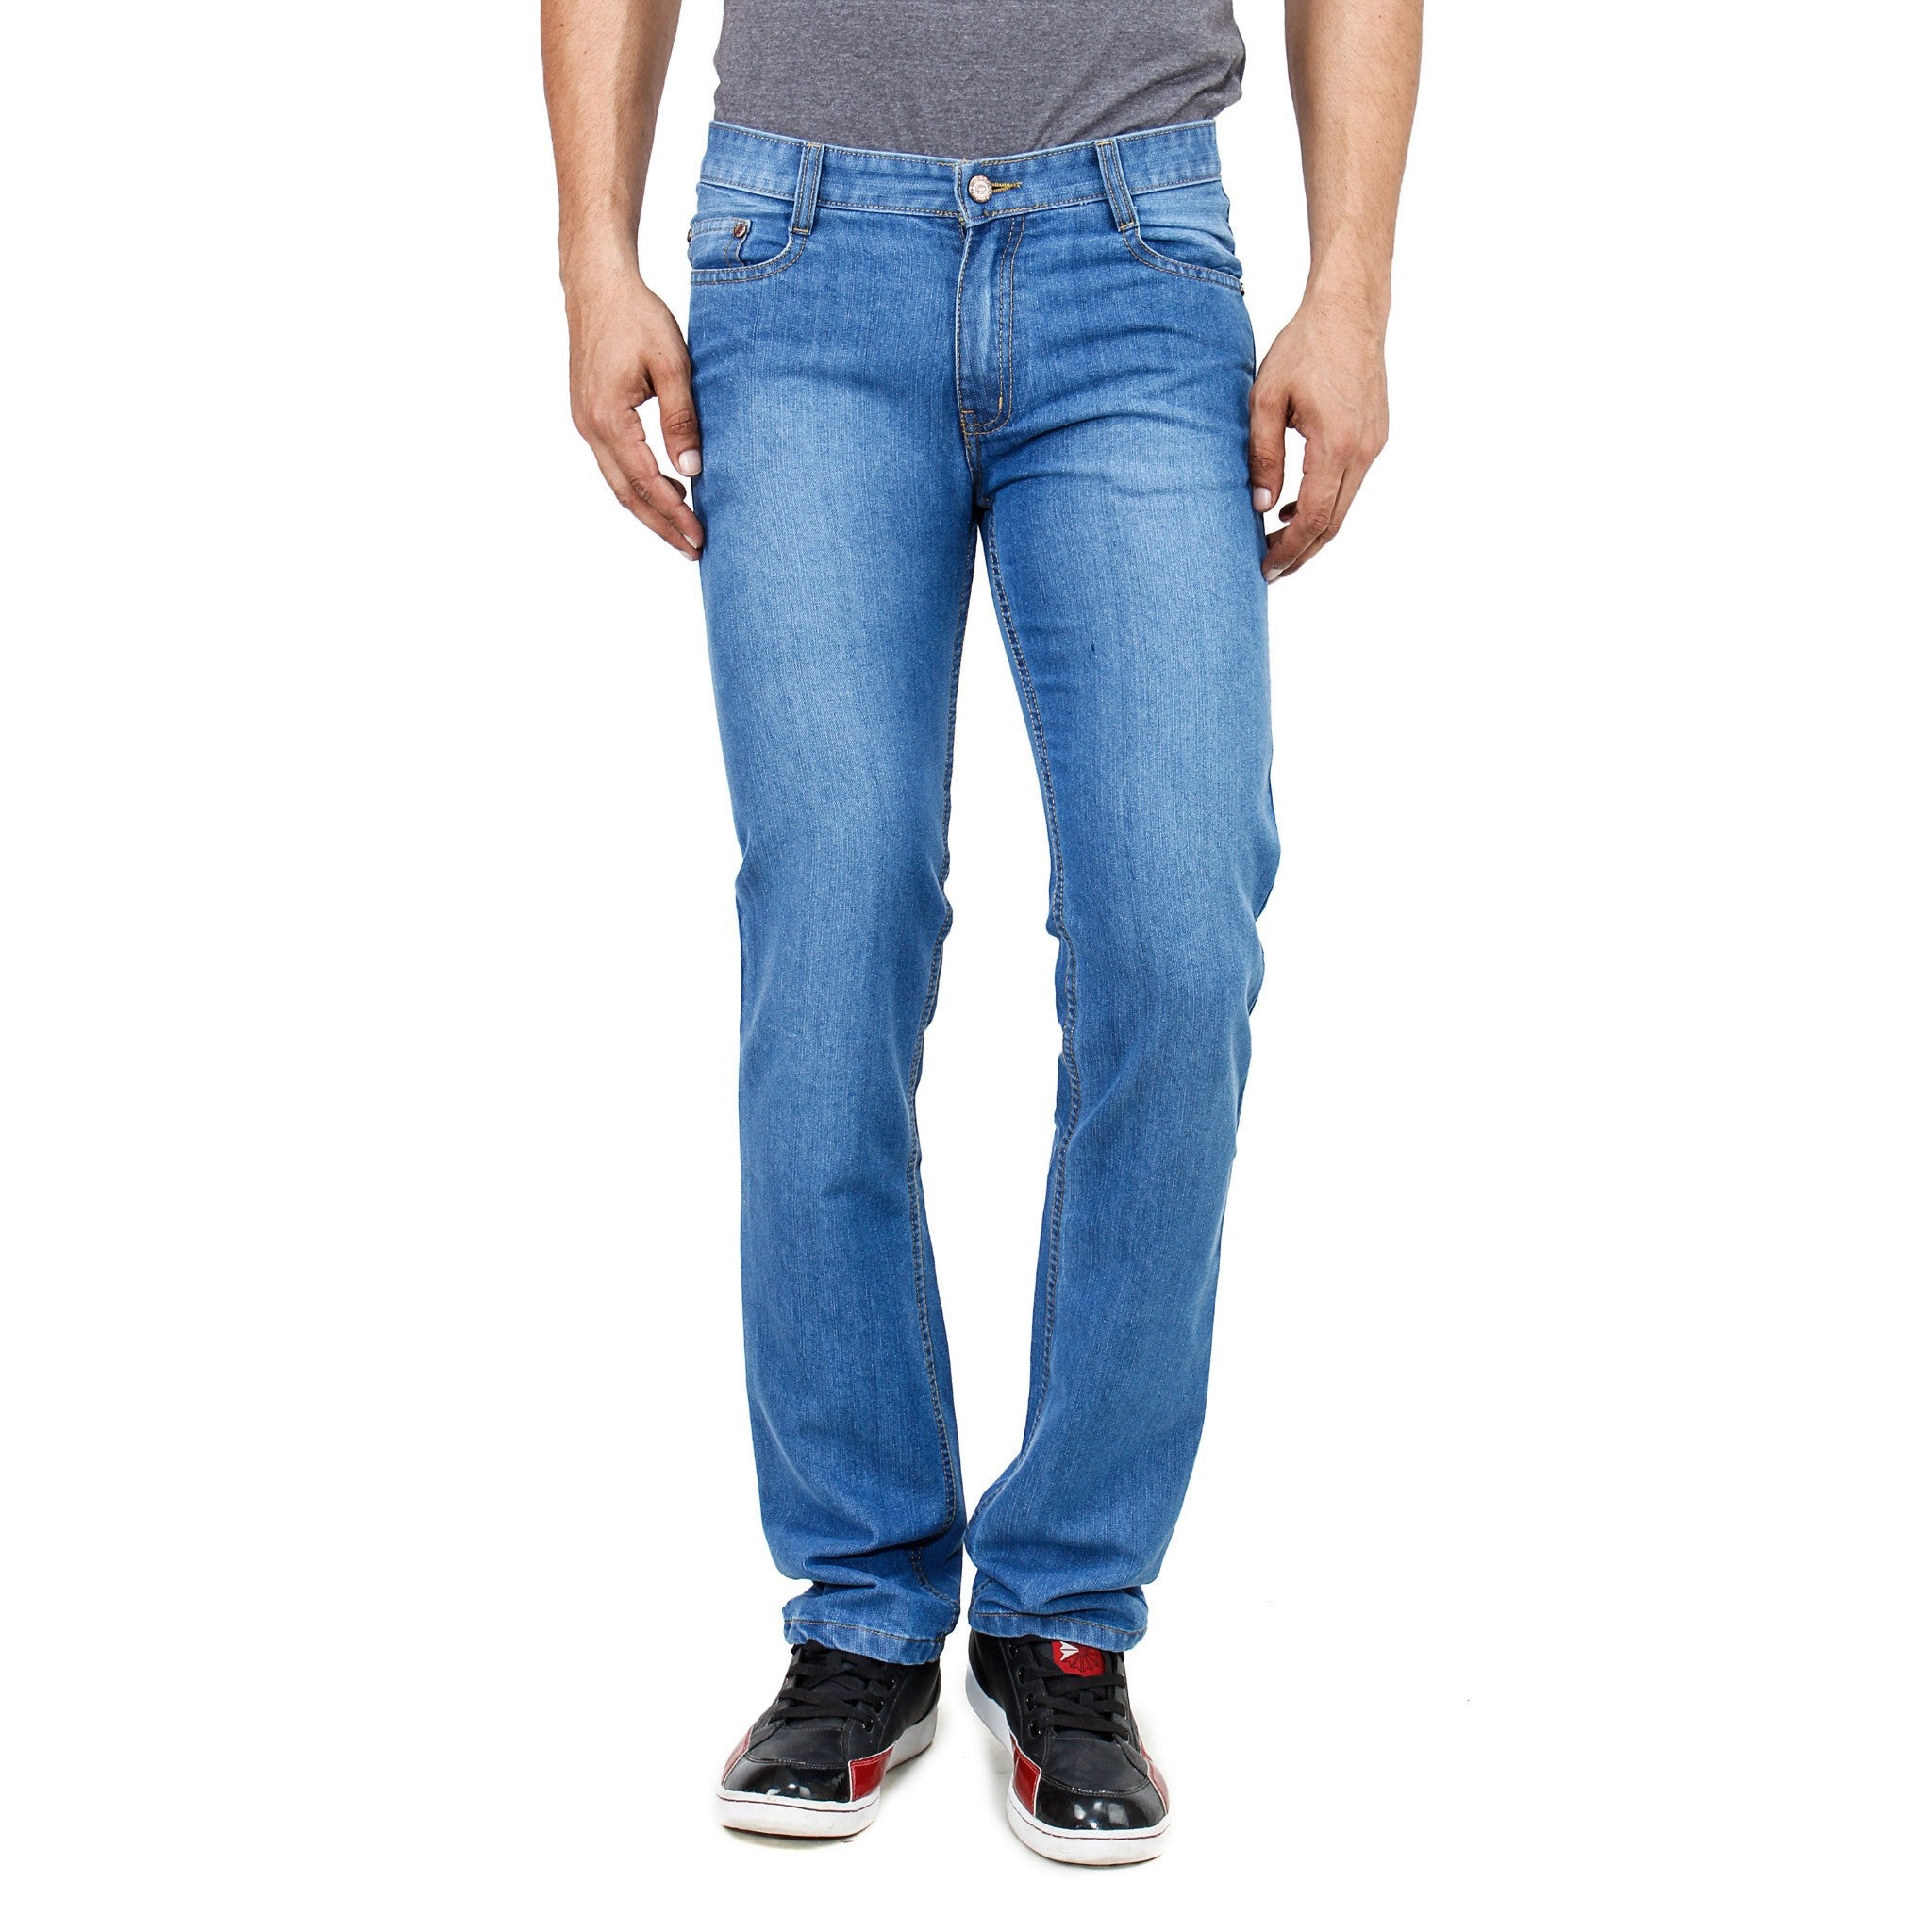 Update more than 155 denim jeans hyderabad telangana latest